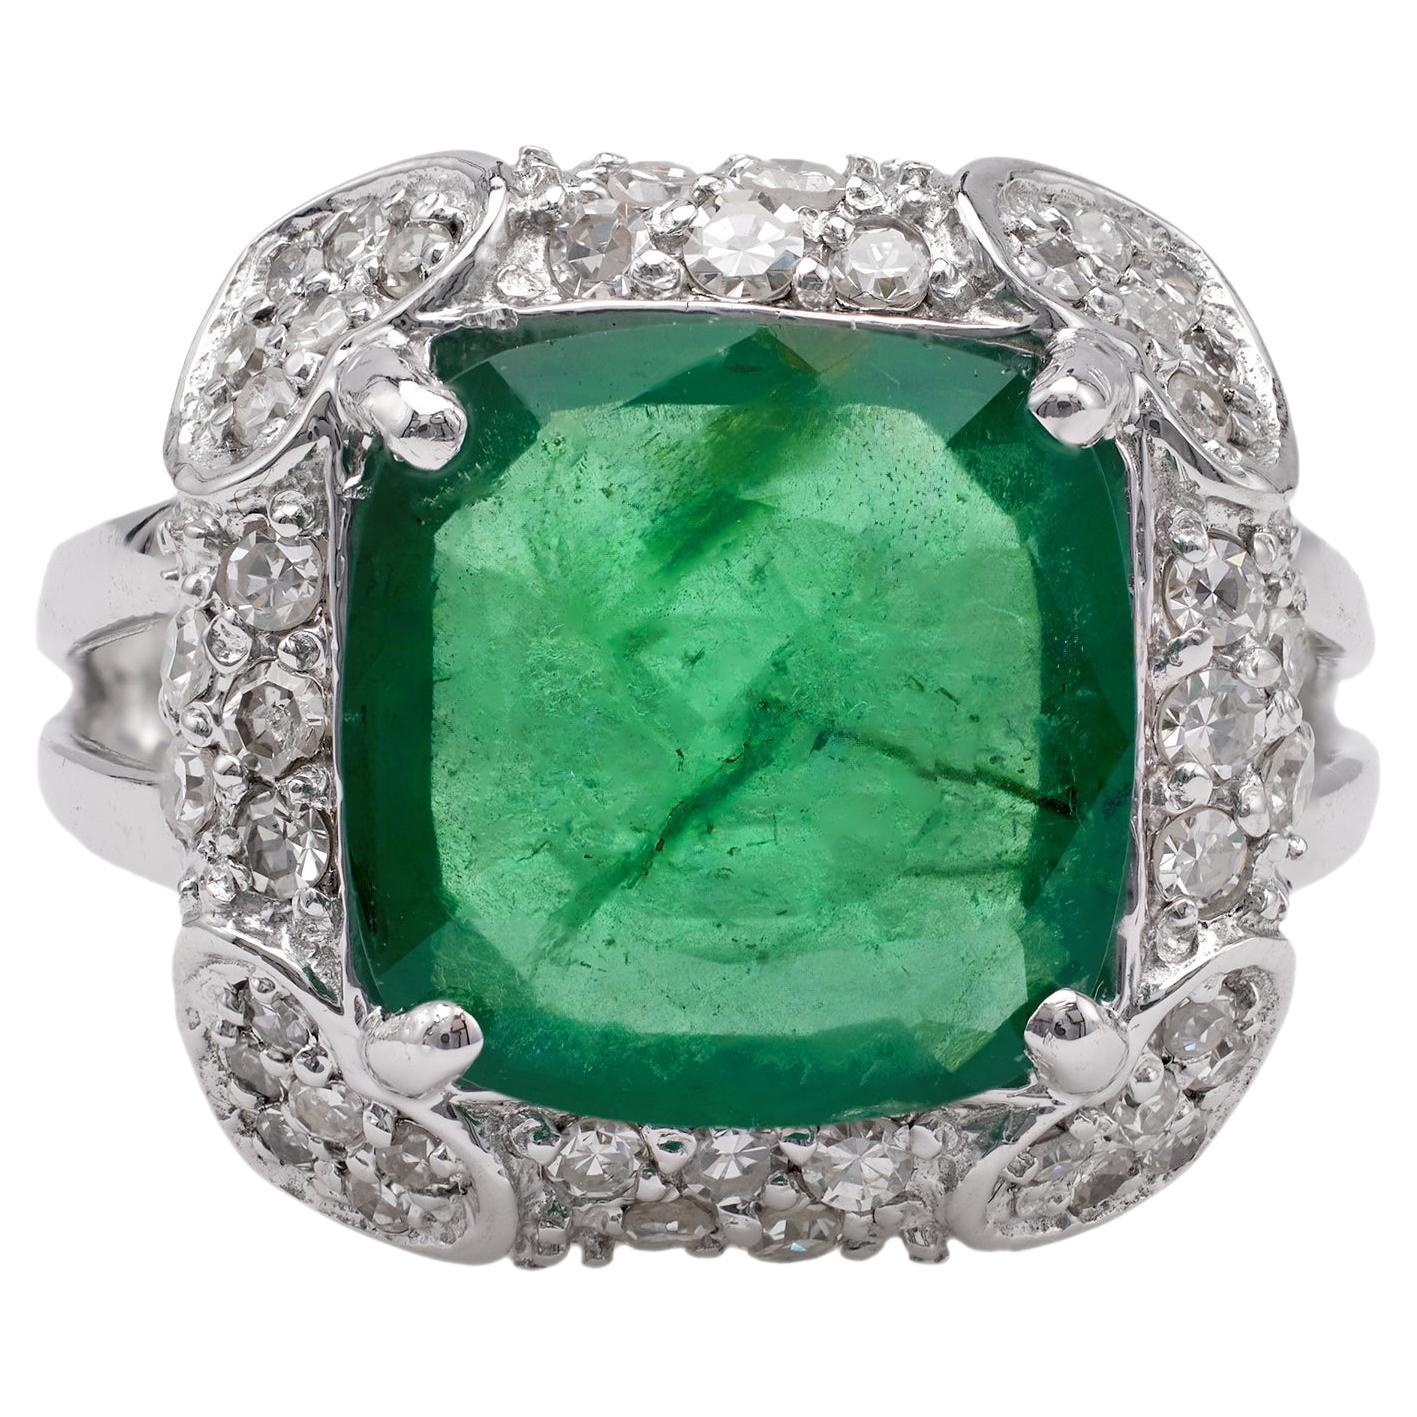 Vintage GIA 4.00 Carat Zambian Emerald Diamond 14k White Gold Ring